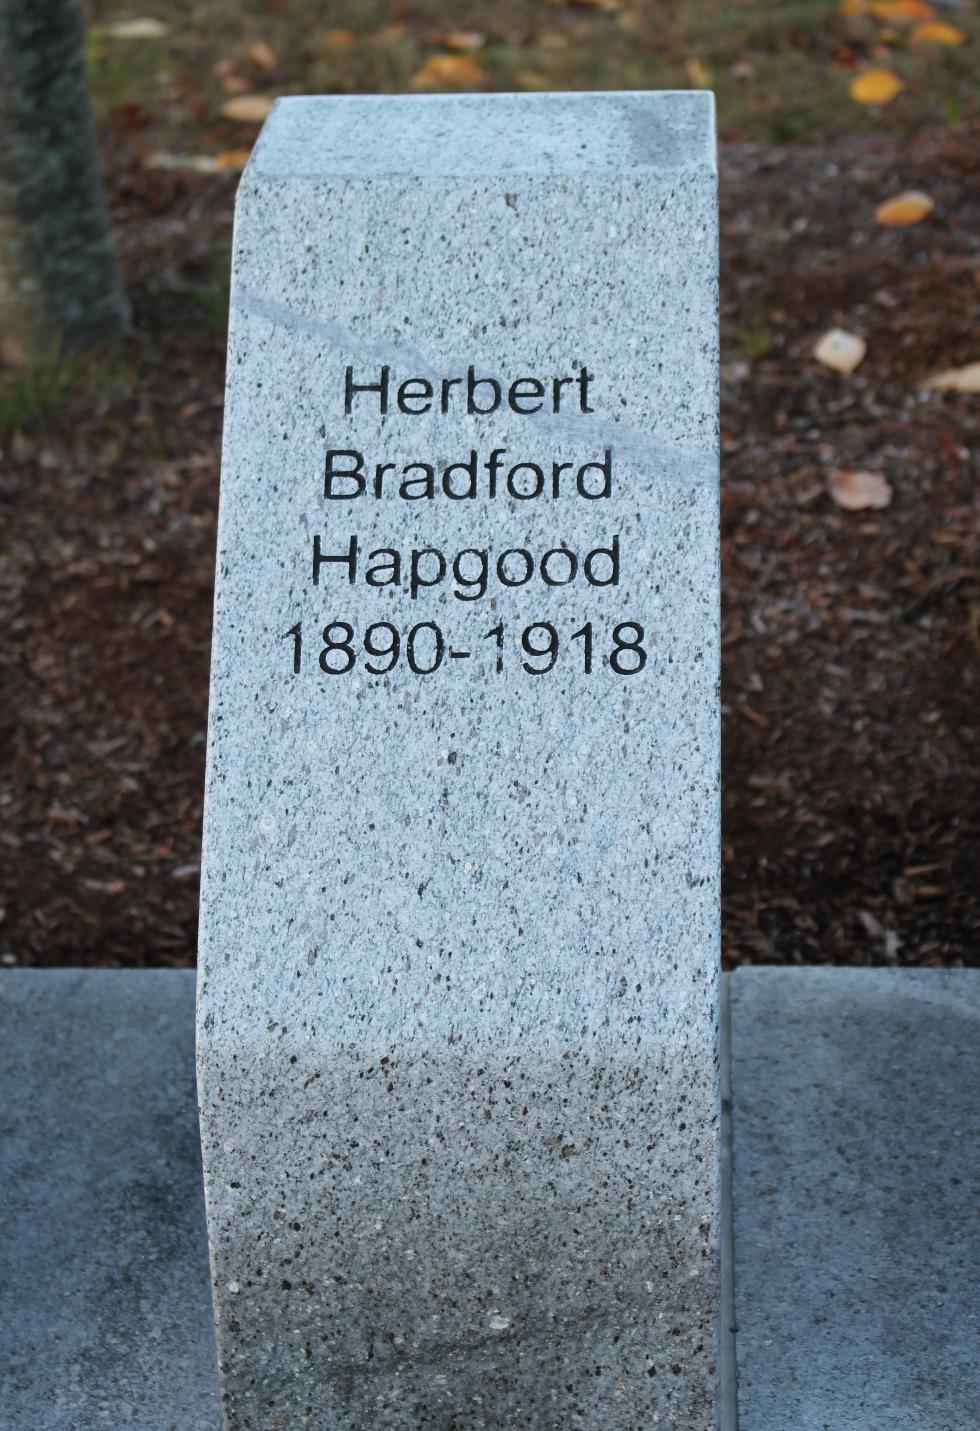 Shrewsbury Massachusetts World War I Veterans Memorial Herbert Bradford Hapgood